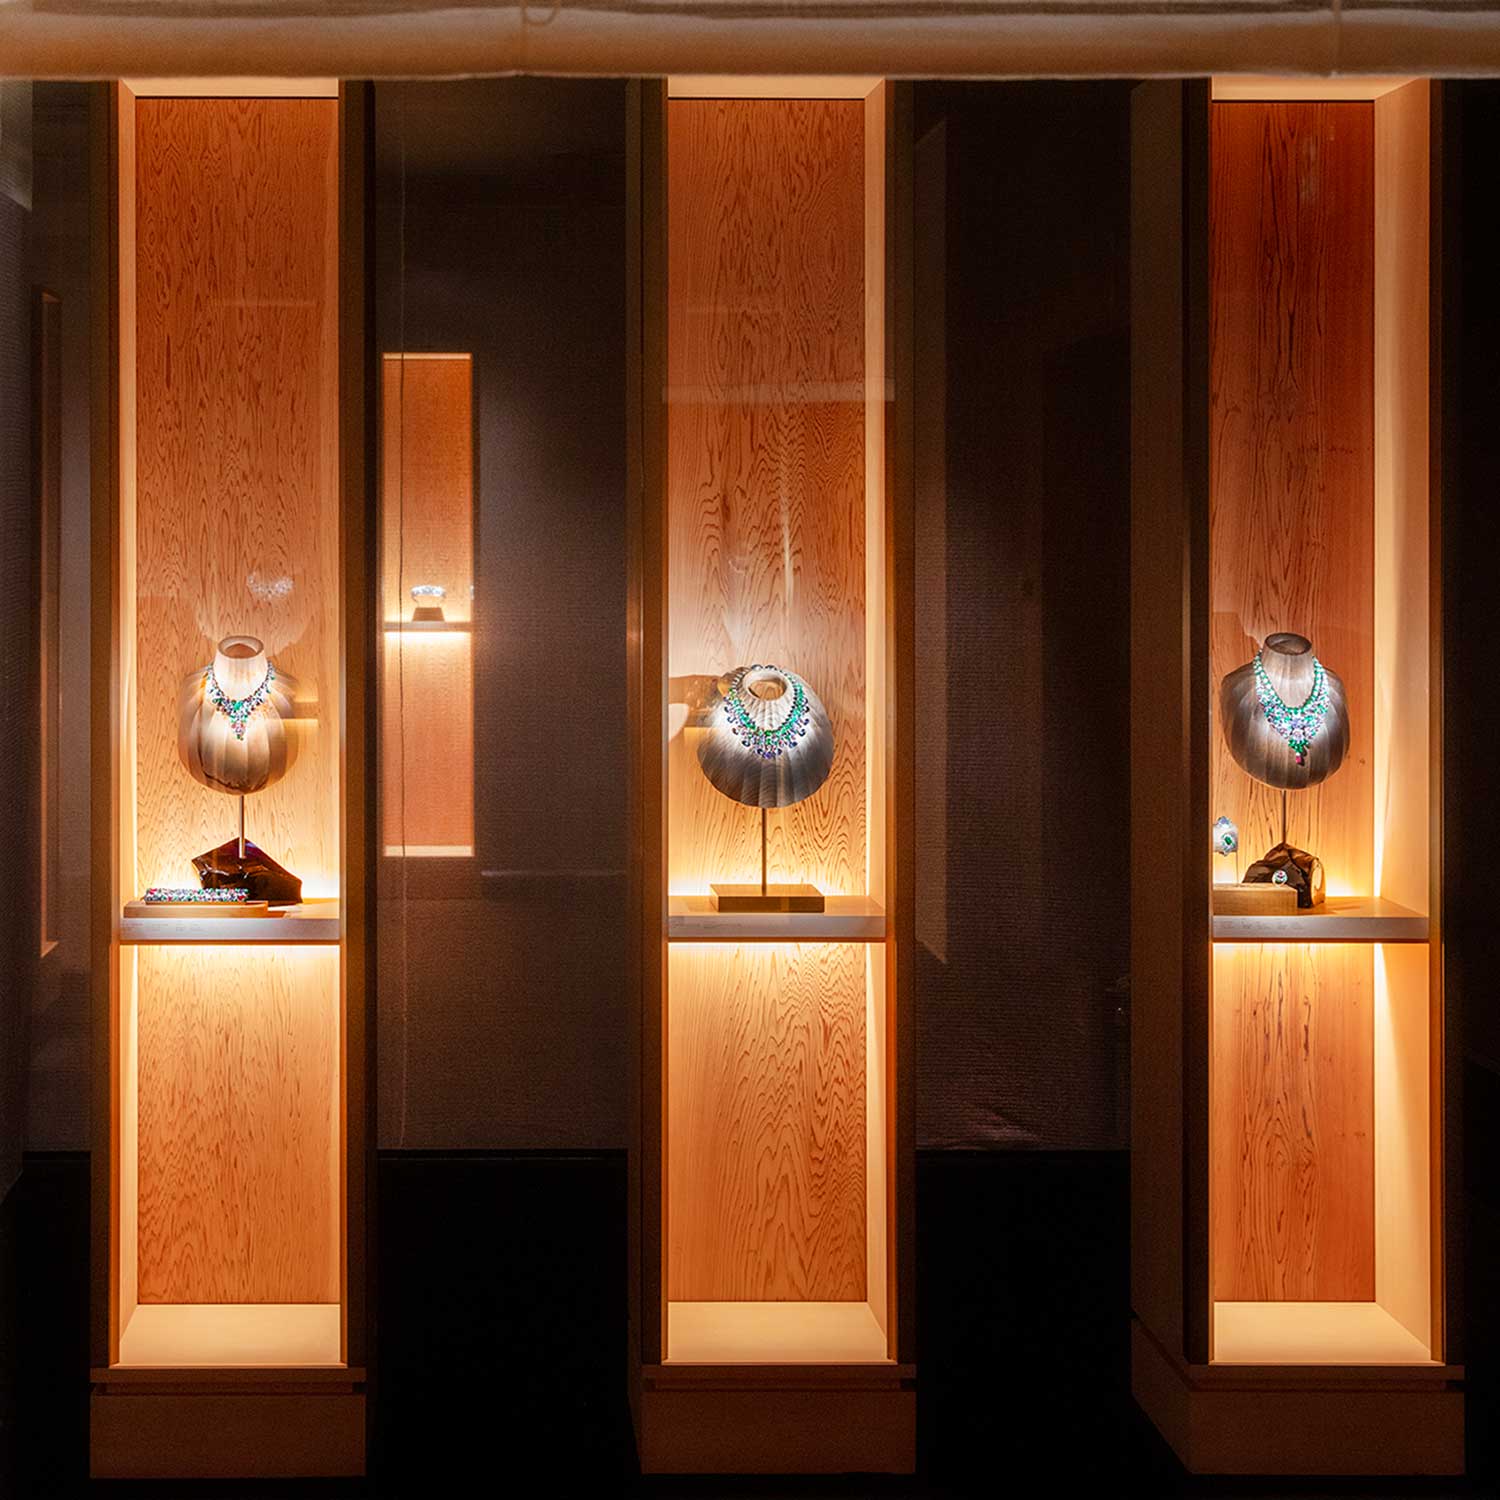 Cartier triễn lãm tại Seoul Dongdaemun Design Plaza